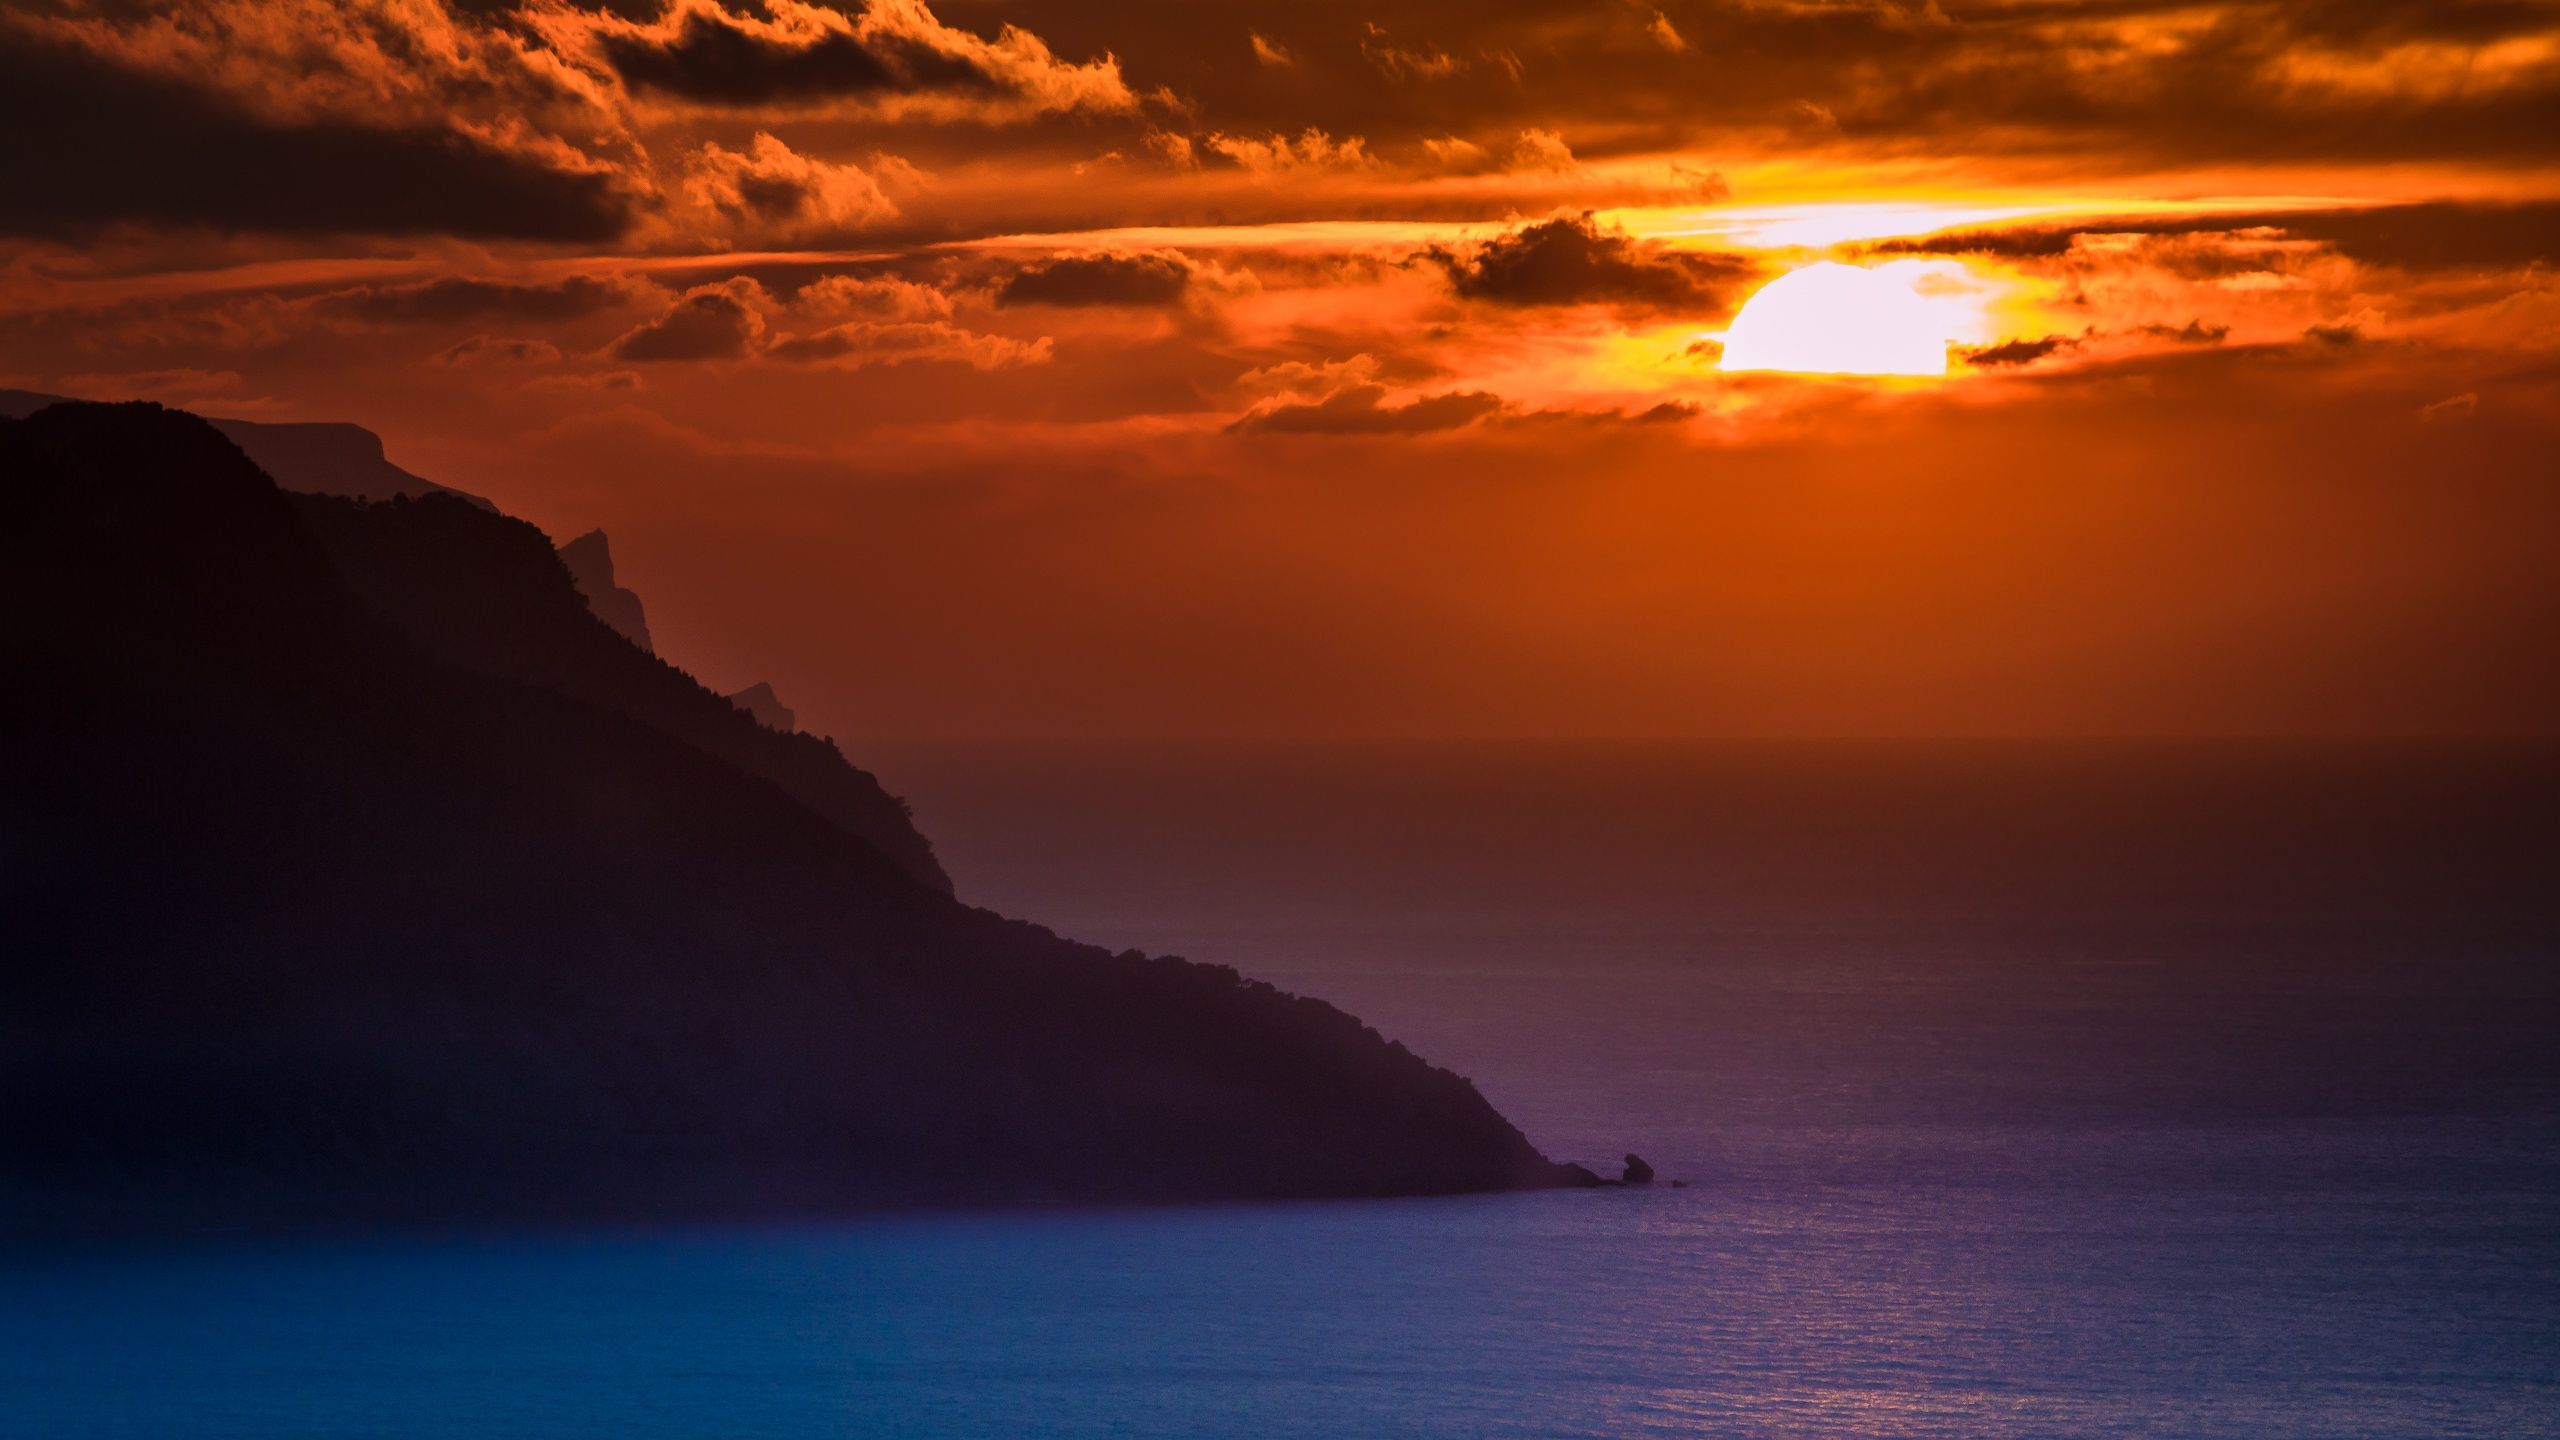  Mallorca Hintergrundbild 2560x1440. Mallorca Island Wallpaper 4K, Spain, Sunset Orange, Cloudy Sky